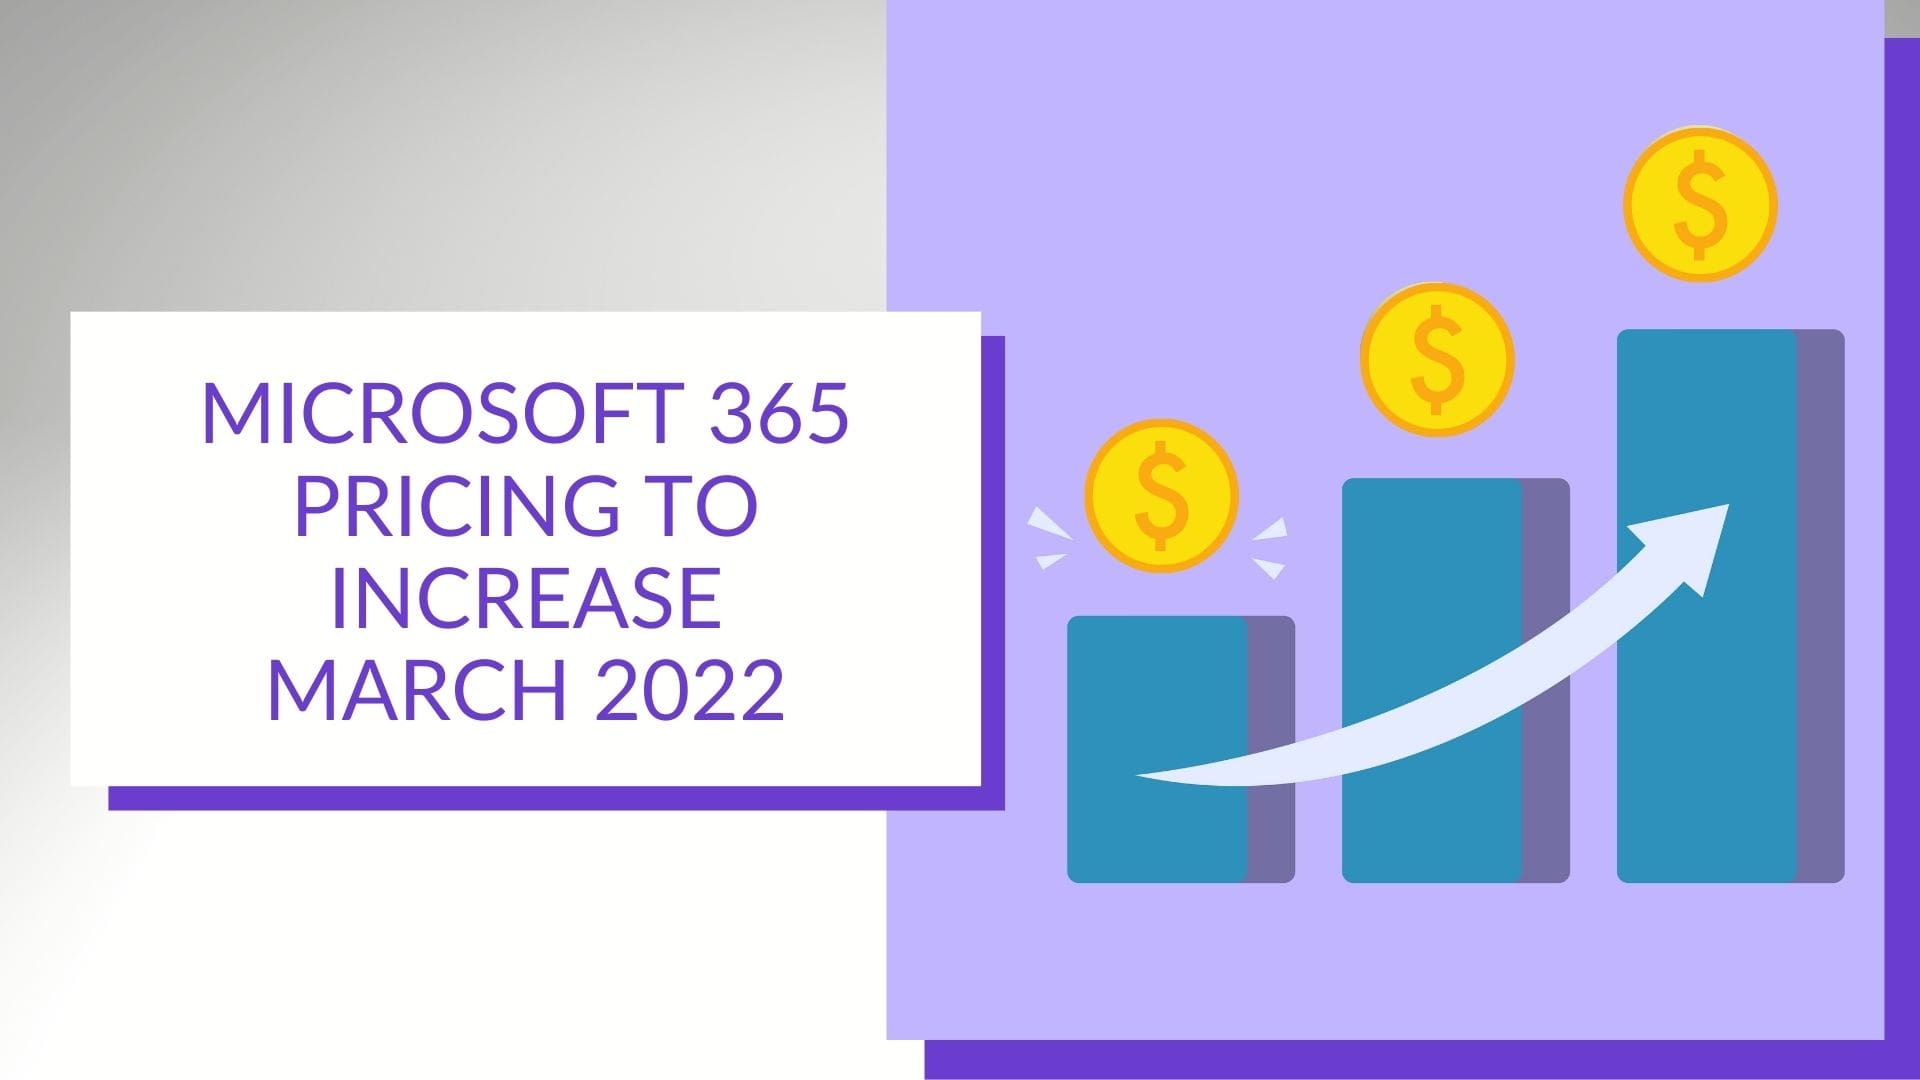 Microsoft 365 Pricing image